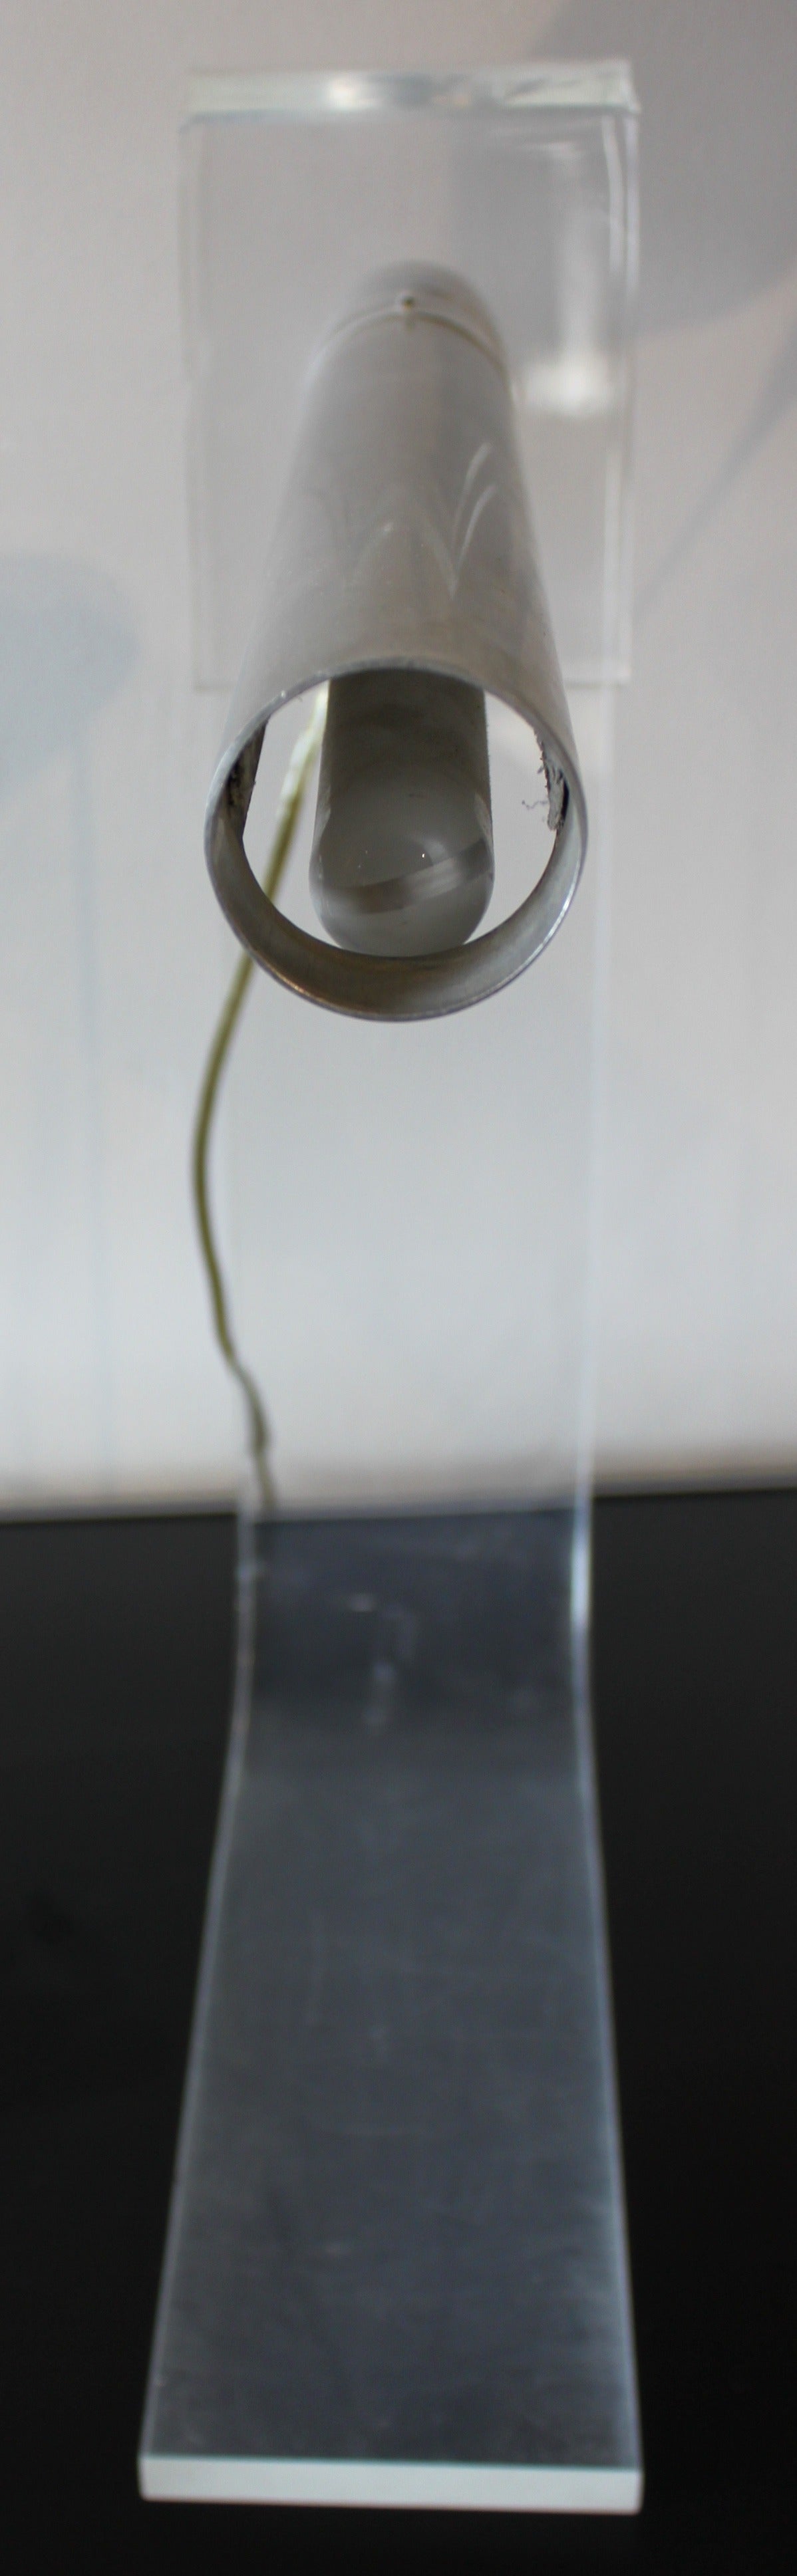 Aluminum and acrylic table lamp by Sonneman.